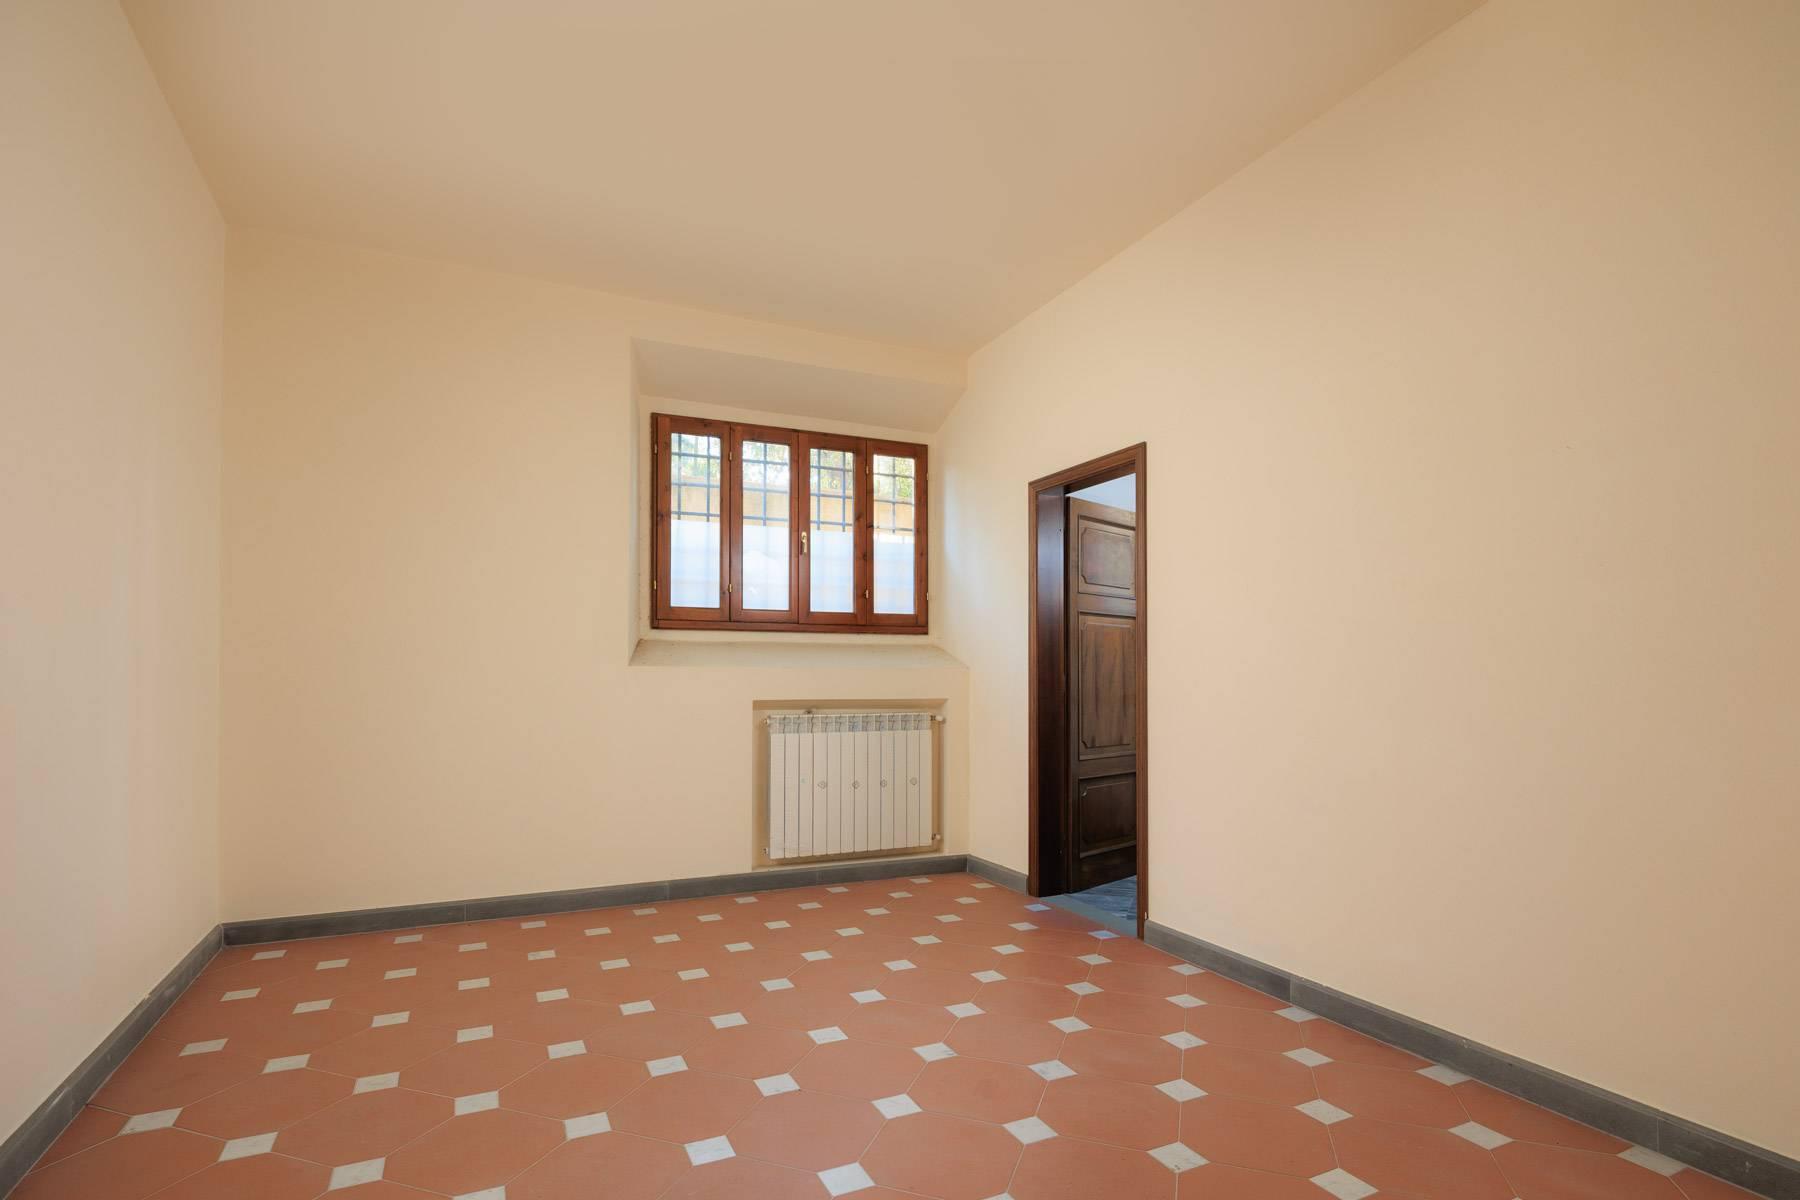 Apartment in a historic villa on the hills of Carmignano - 11